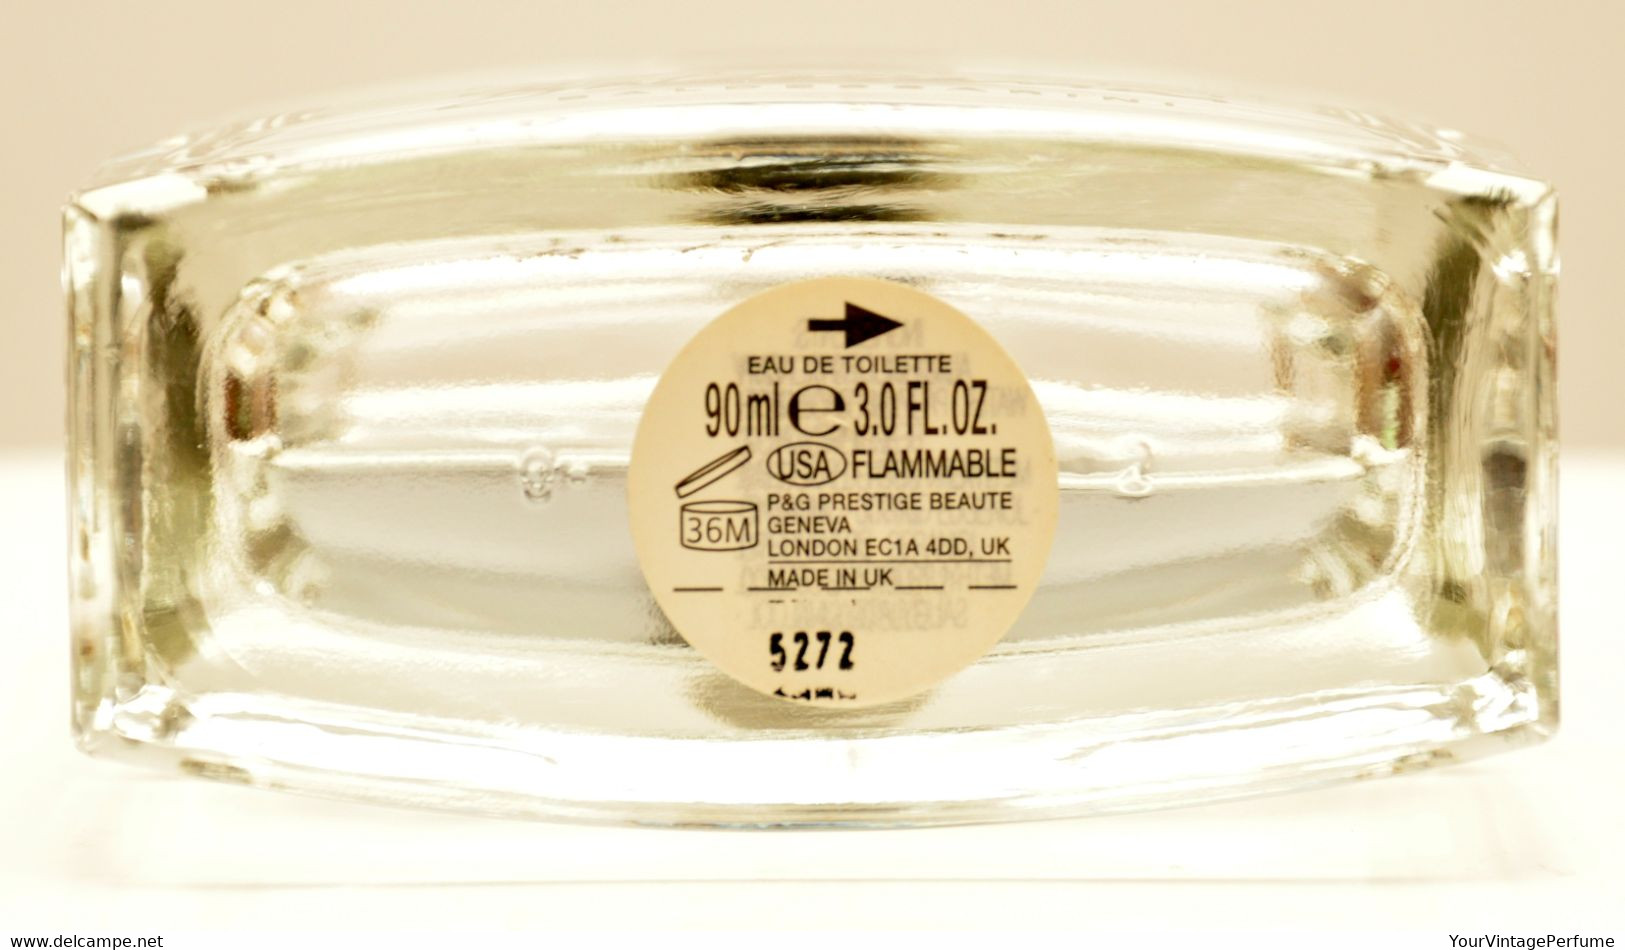 Baldessarini Del Mar​ Eau De Toilette Edt 90ml 3.0 Fl. Oz. Spray Perfume Man Rare Vintage 2005 Used - Men